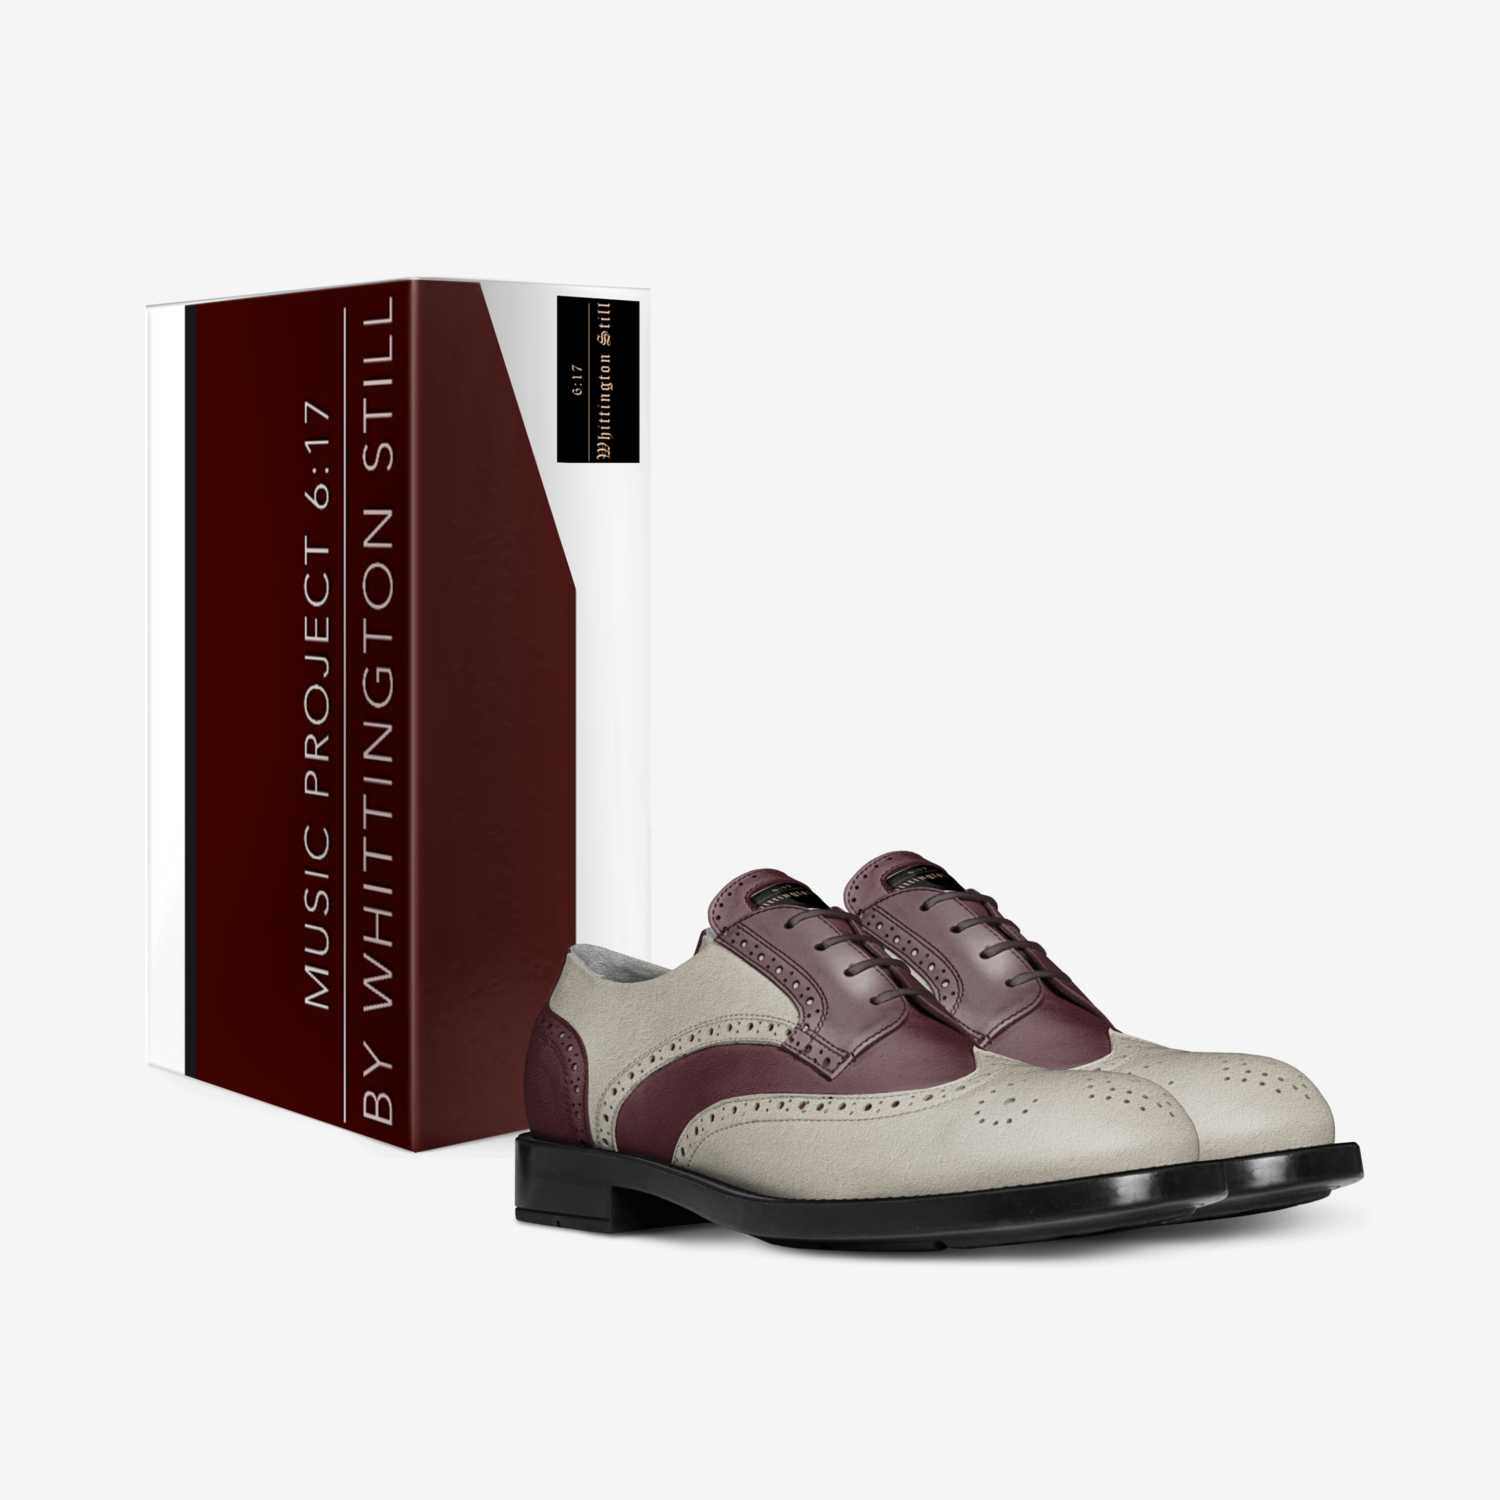 Whittington Still custom made in Italy shoes by Whittington Still | Box view